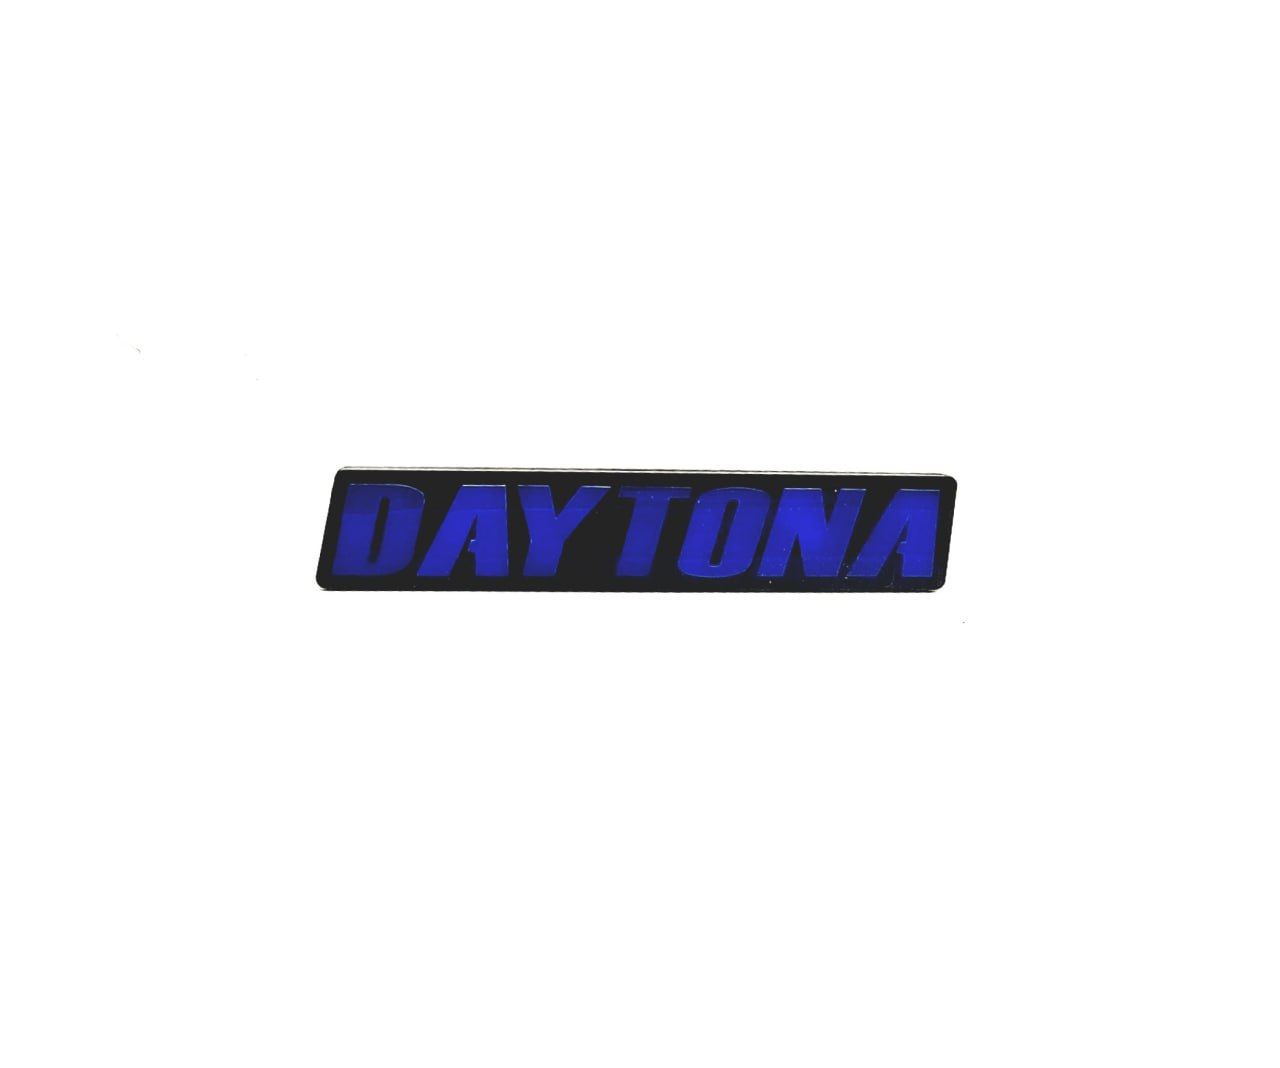 DODGE emblem for fenders with Daytona logo